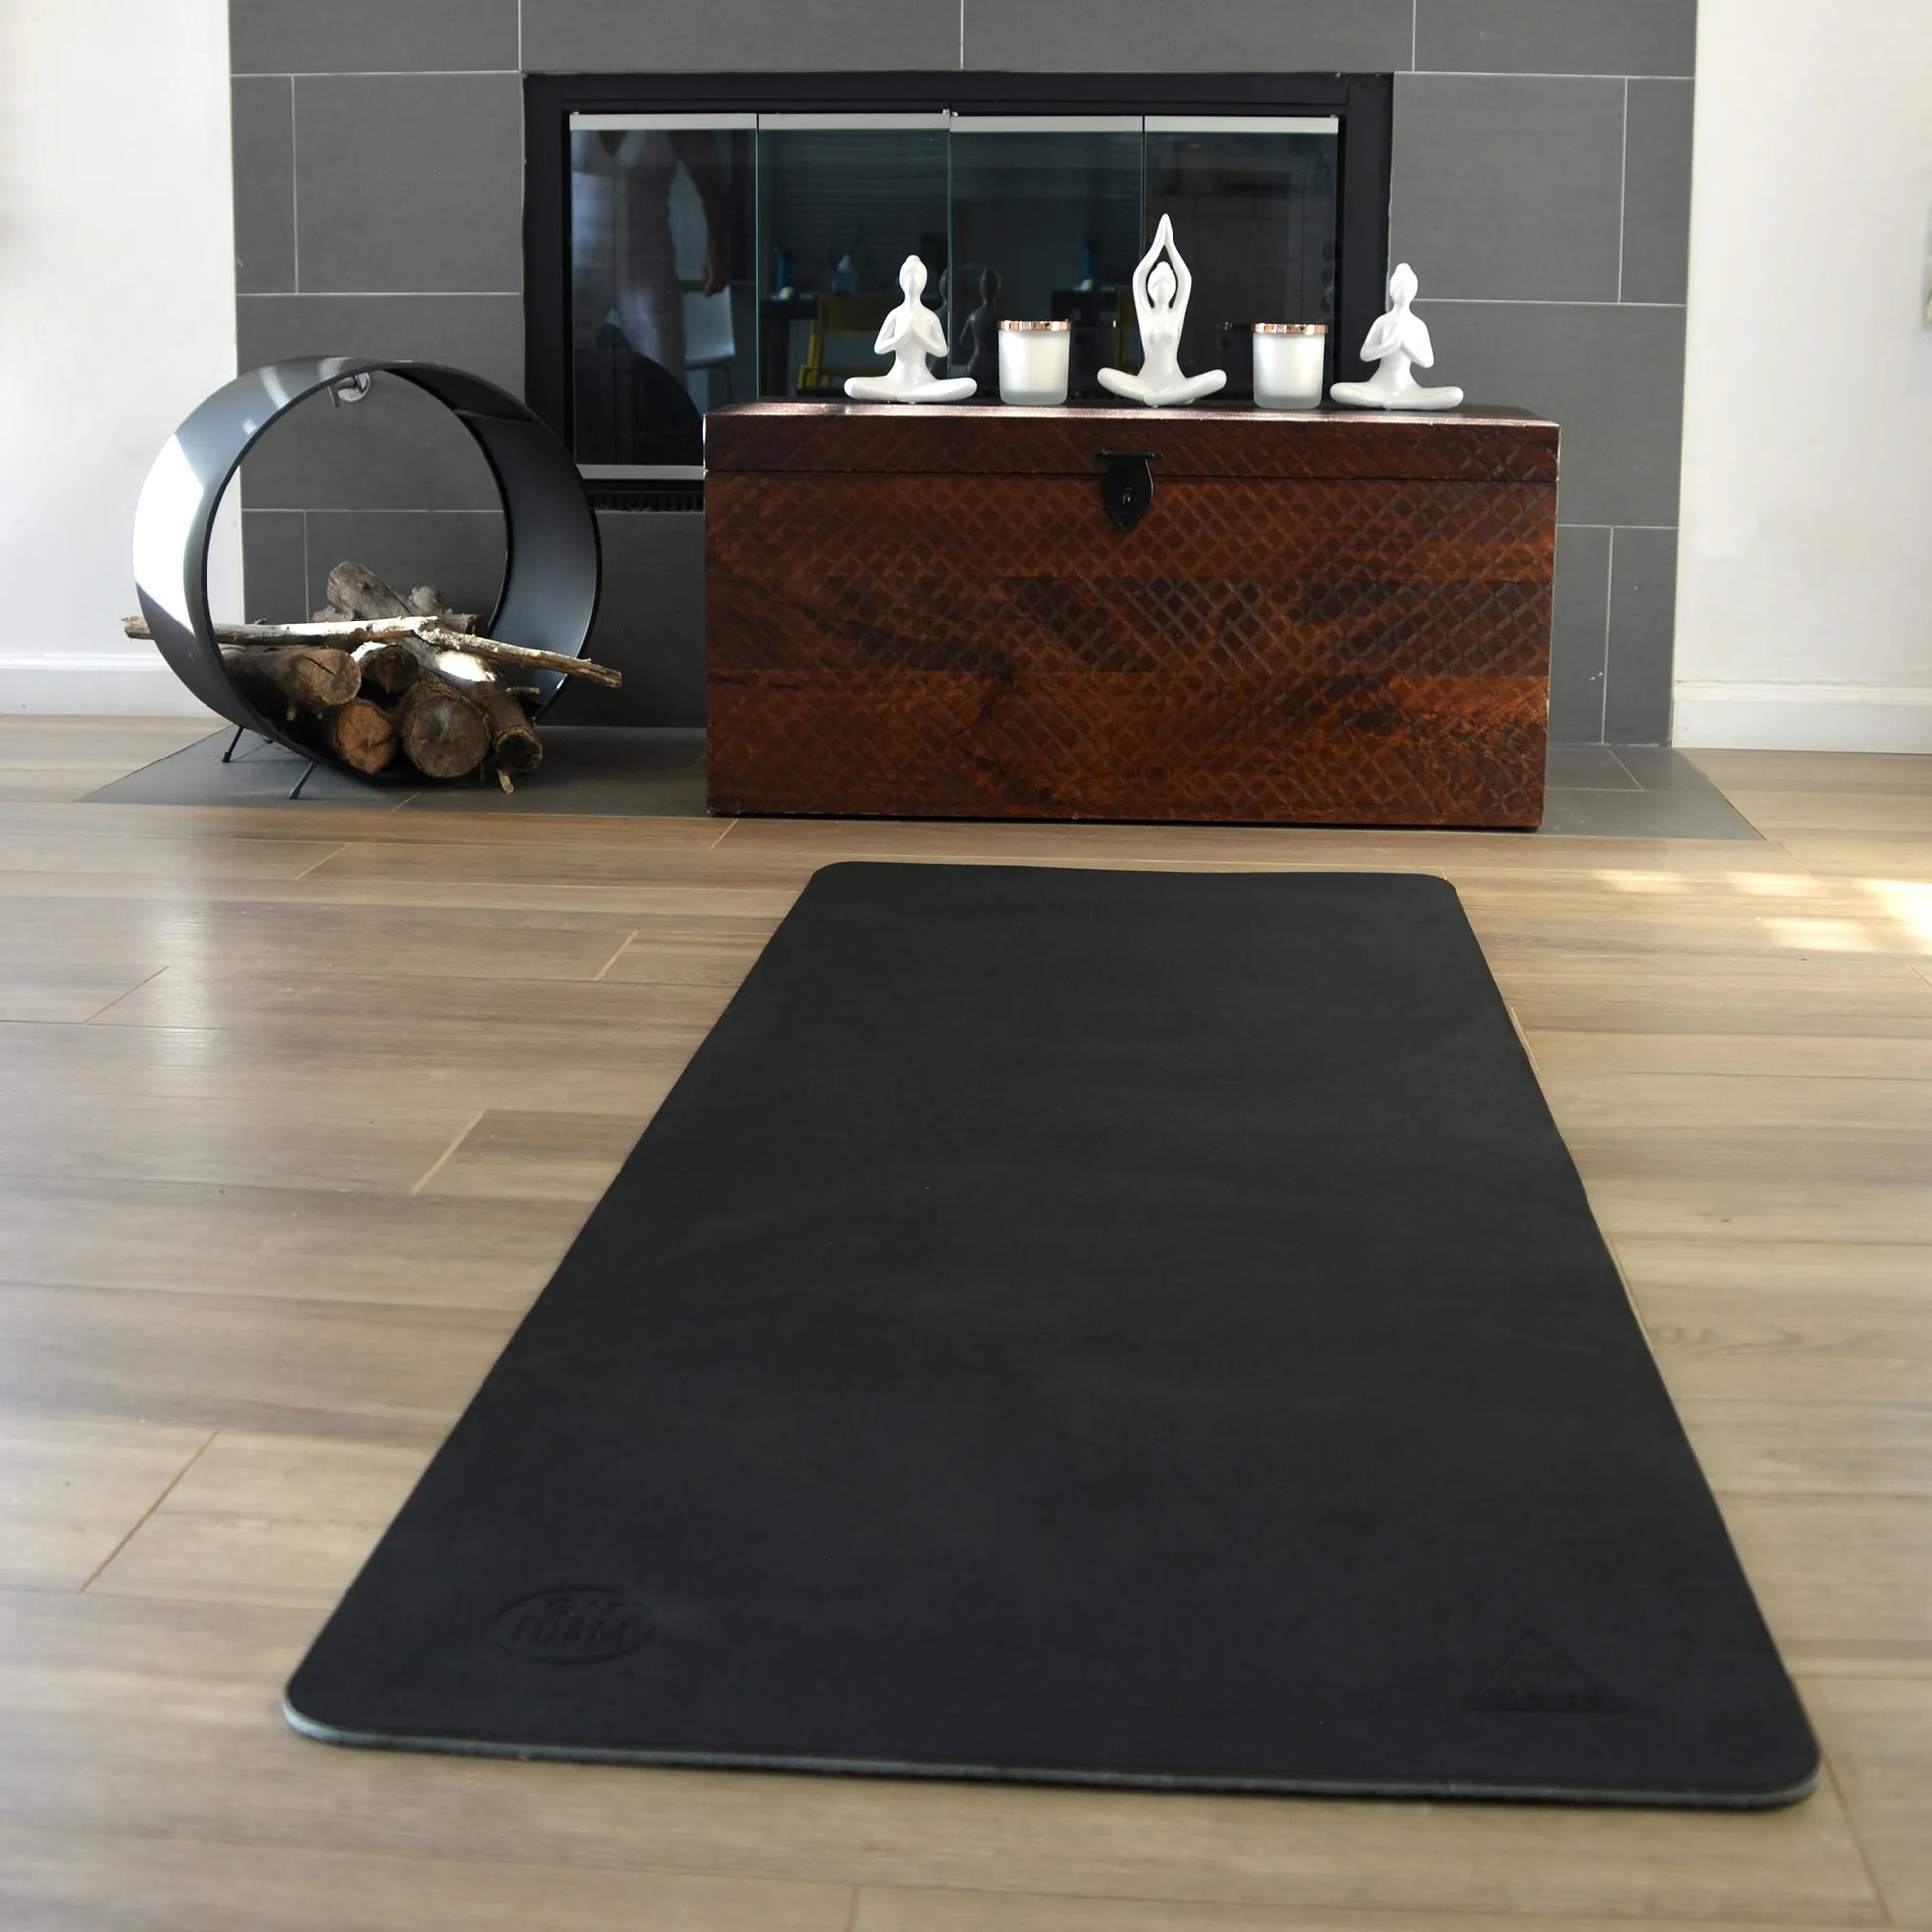 Black yoga mat lying flat.